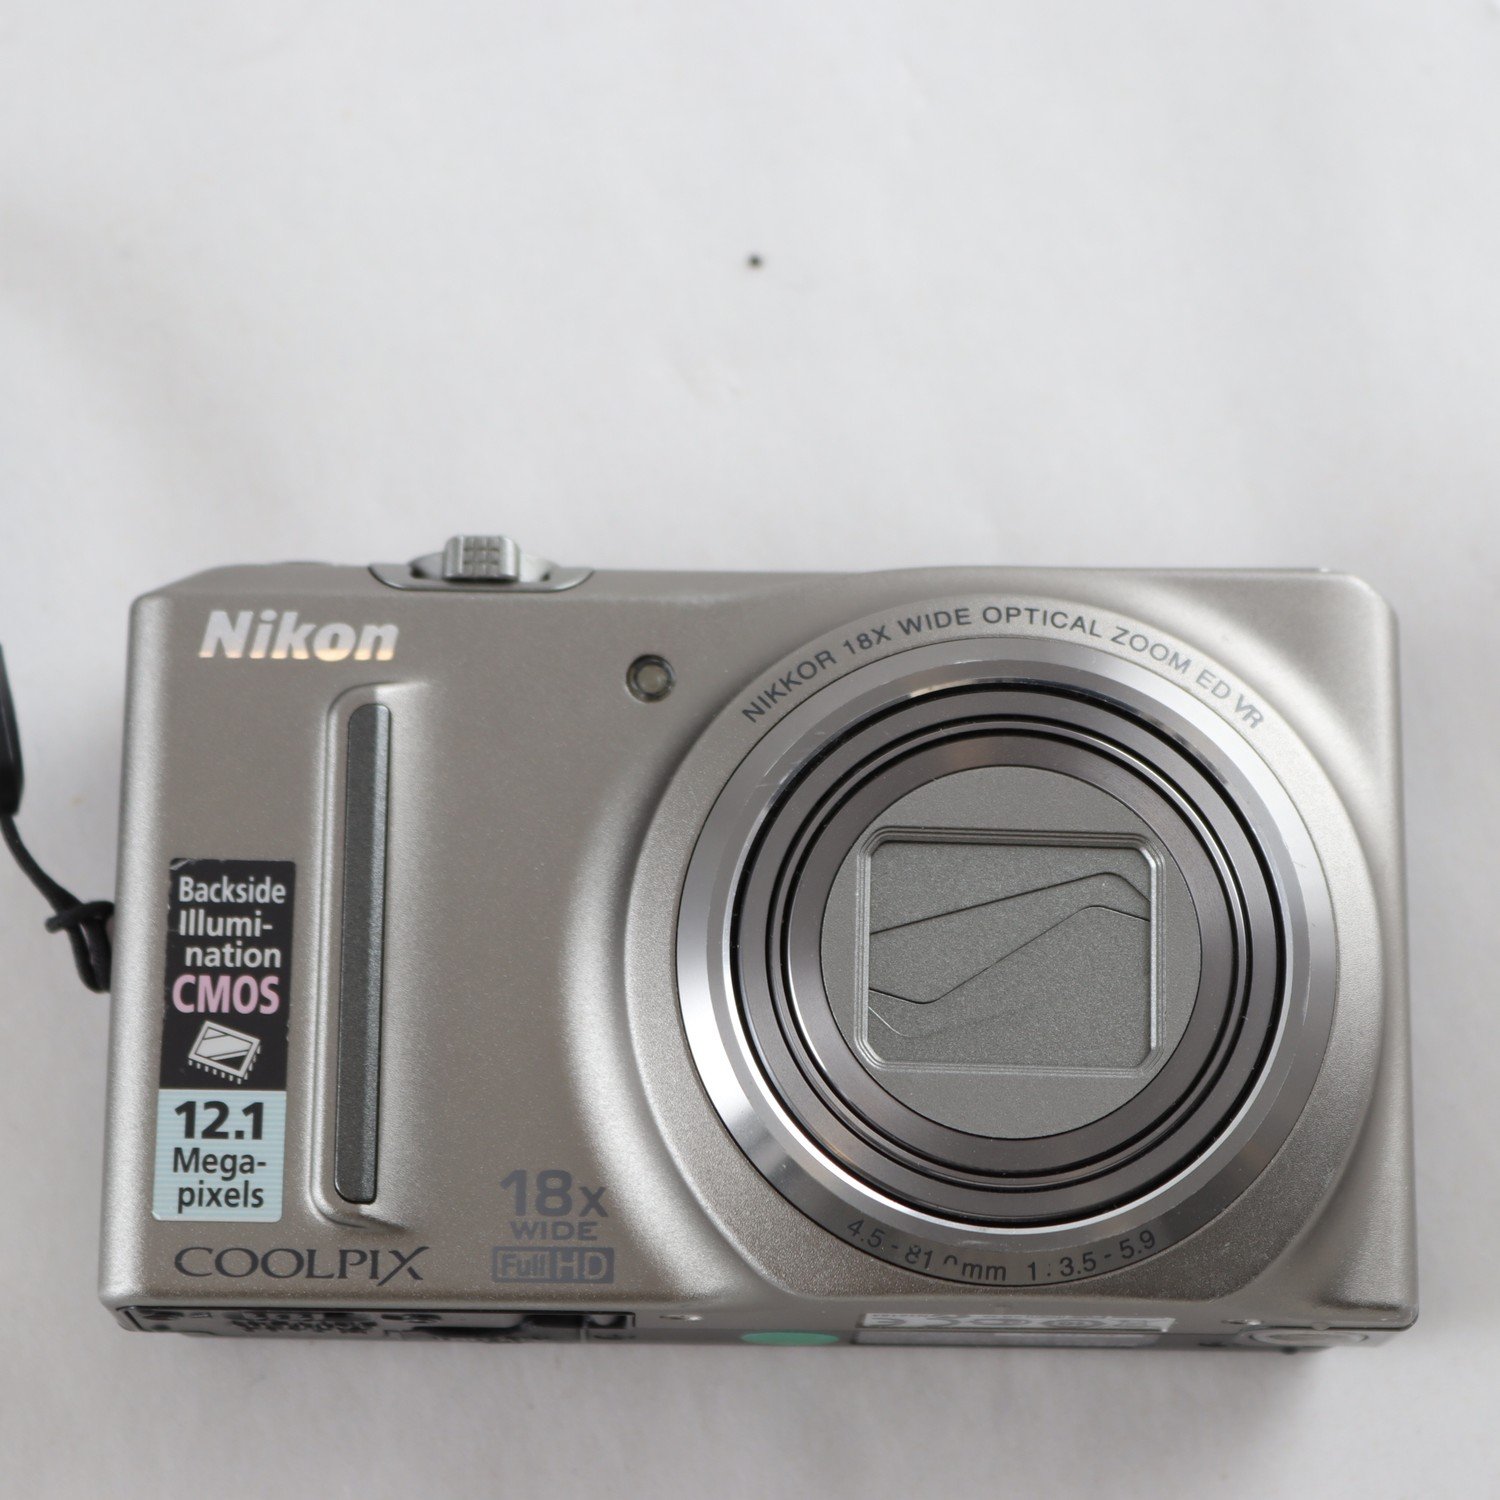 Kamera, Nikon S9100, coolpix.